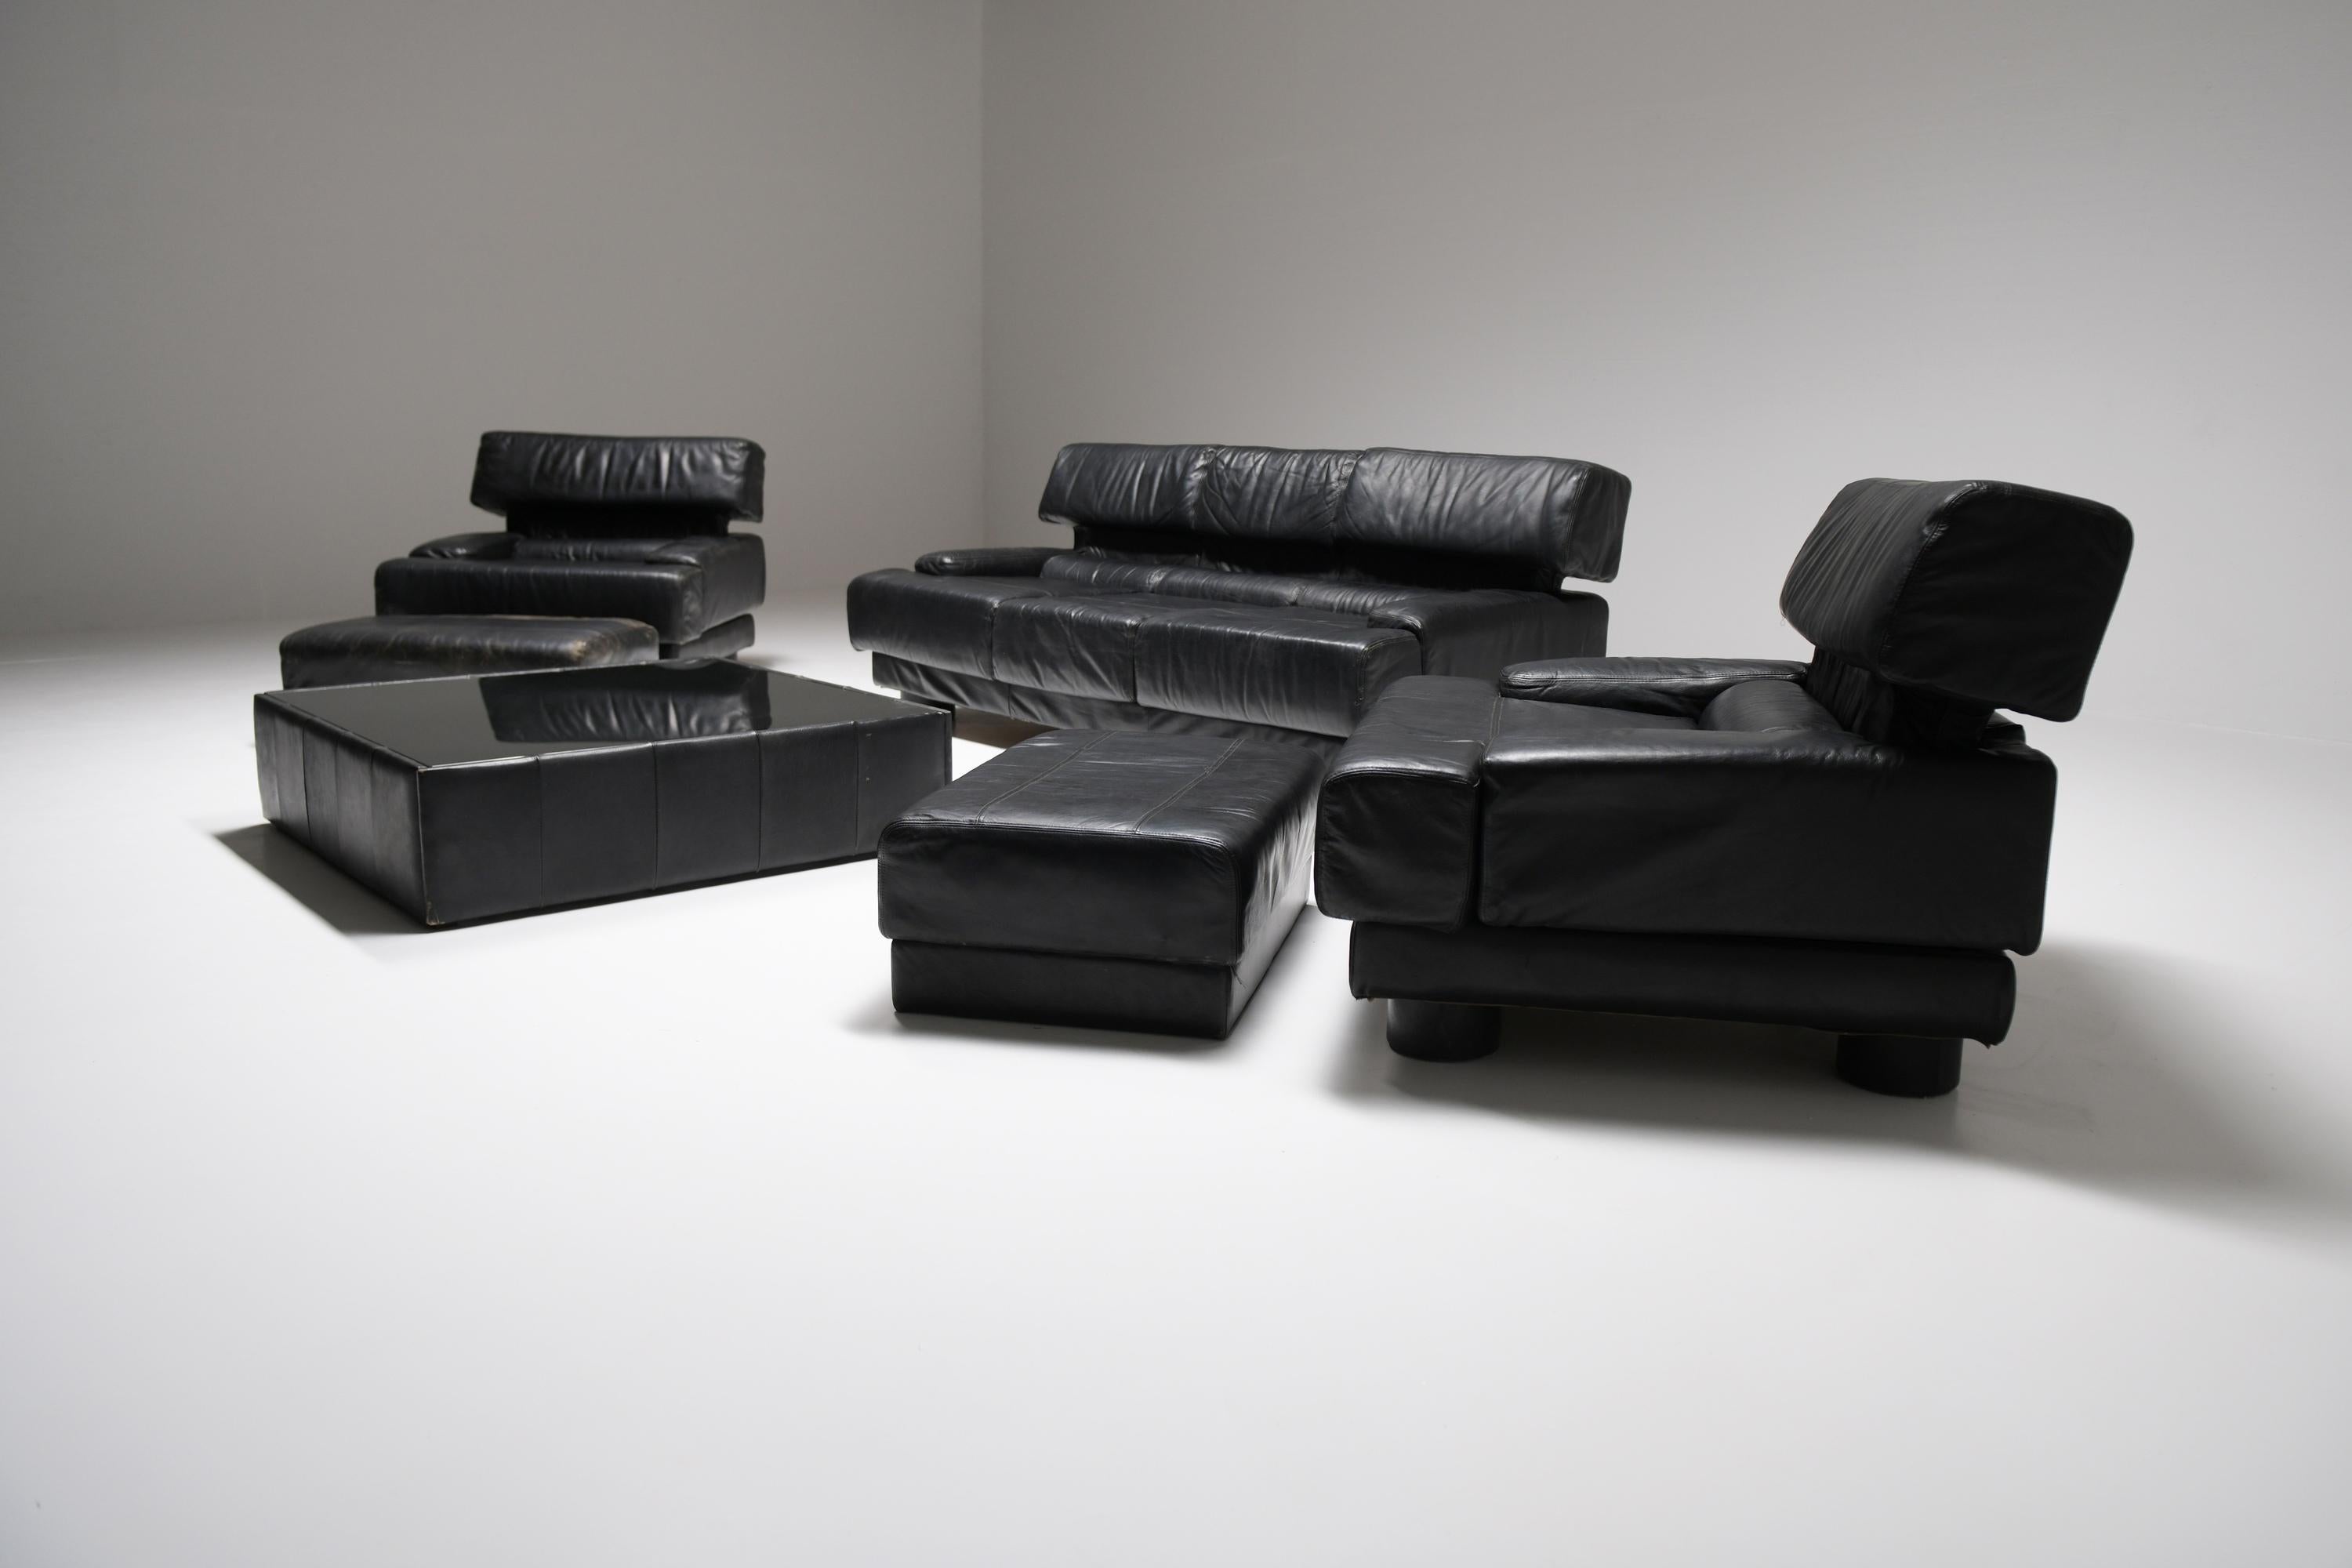 Stunning Percival Lafer sofa set in original black leather - Lafer S.A. - Brazil For Sale 3